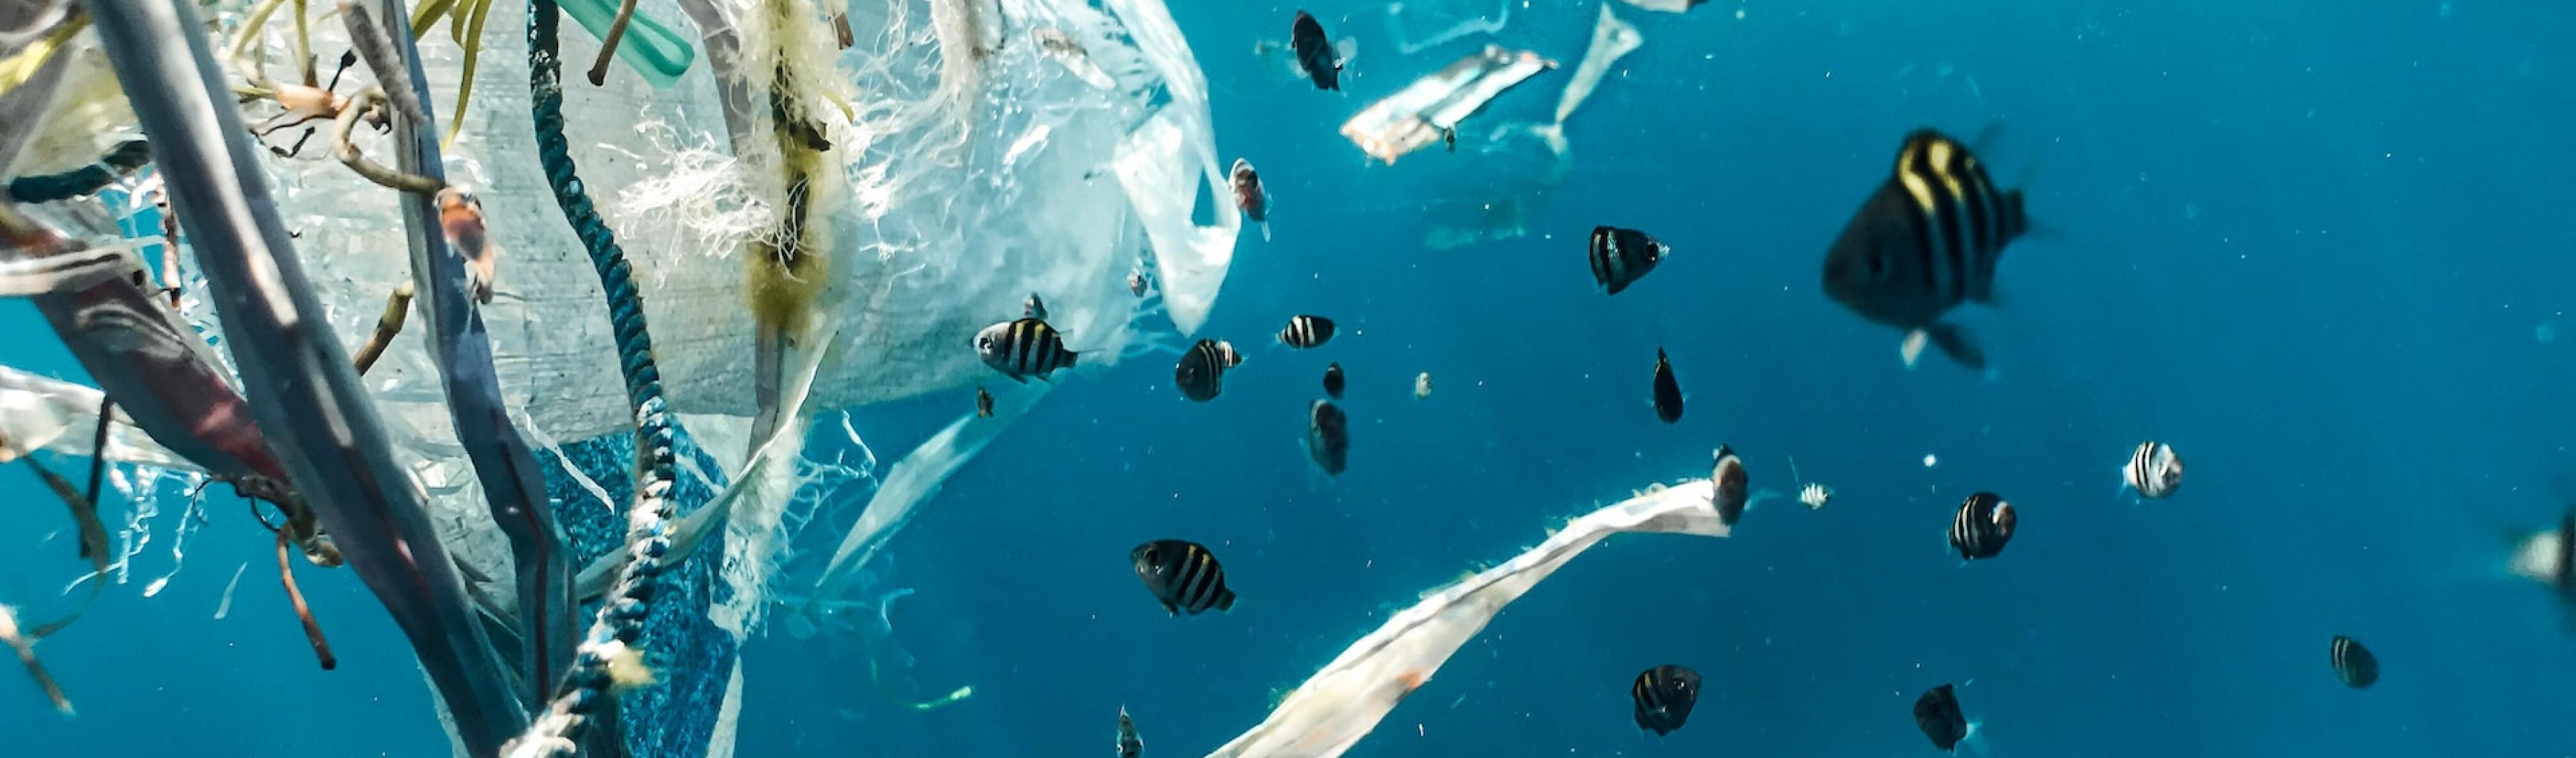 Ikan-ikan di lautan yang tercemar polusi plastik